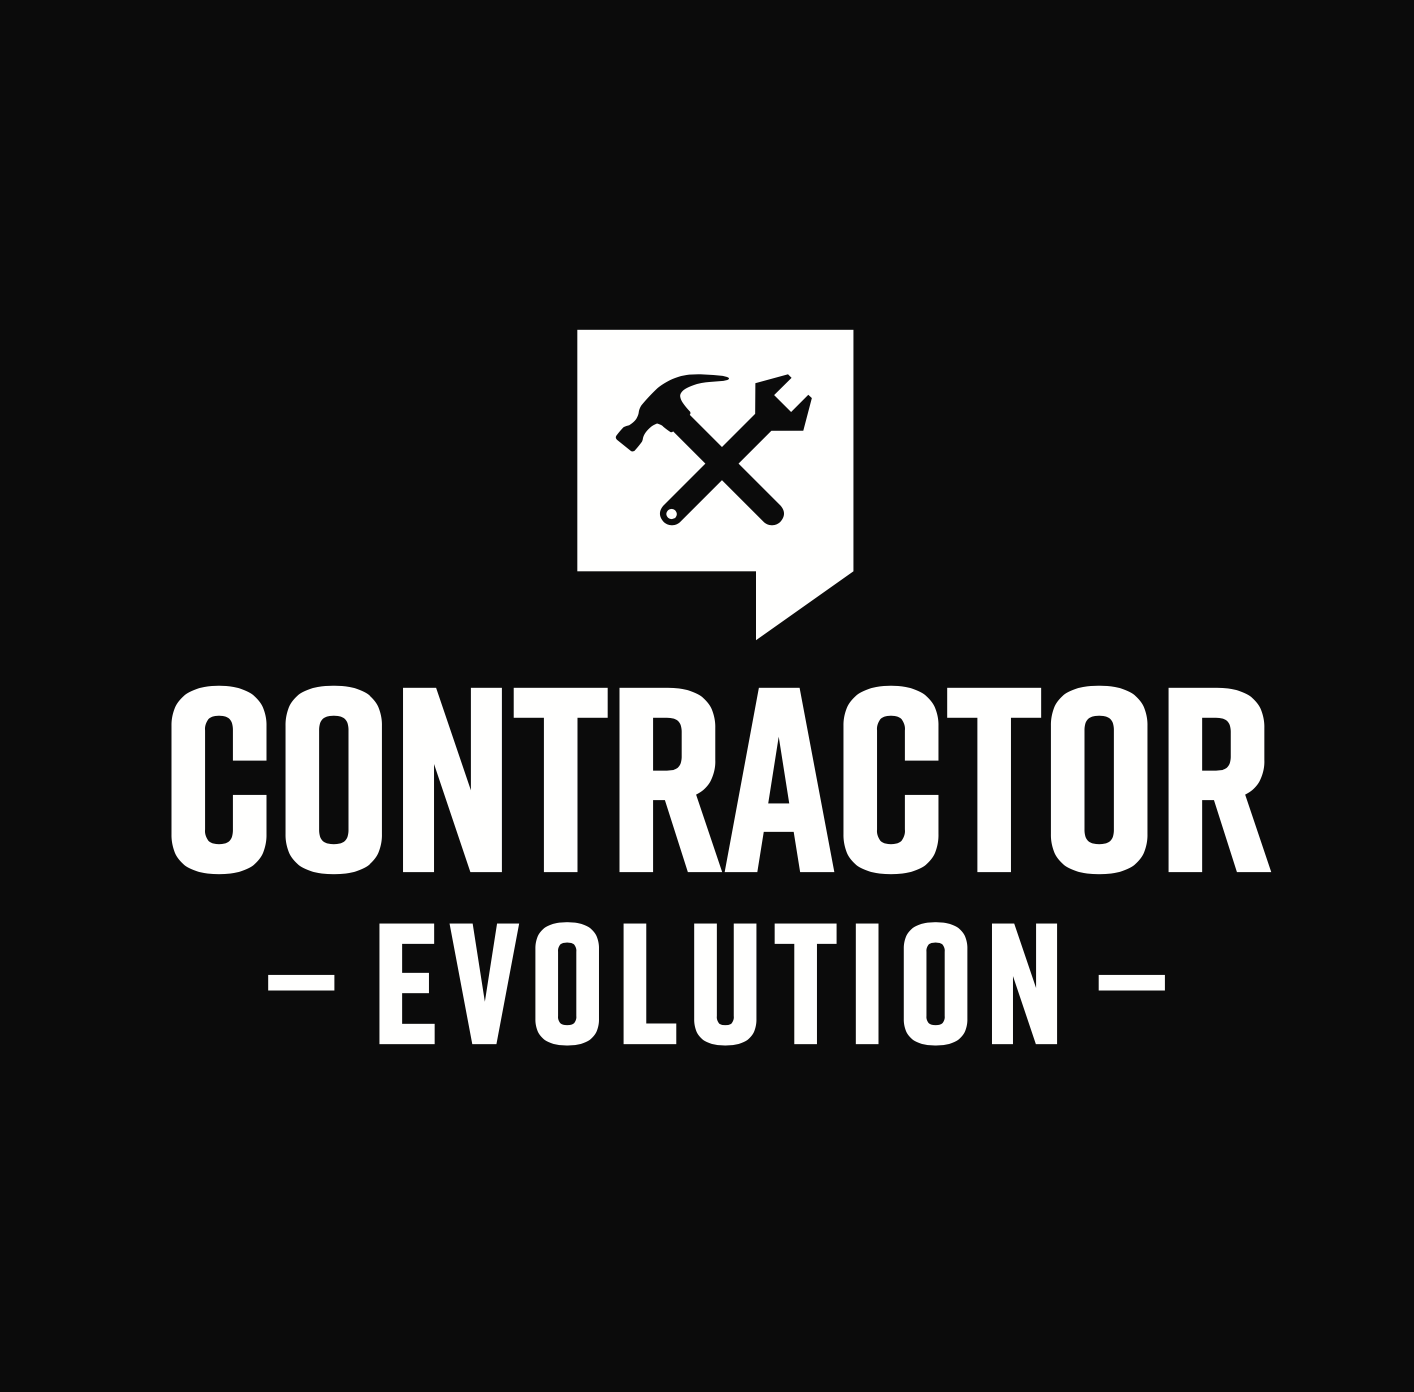 Contractor Evolution